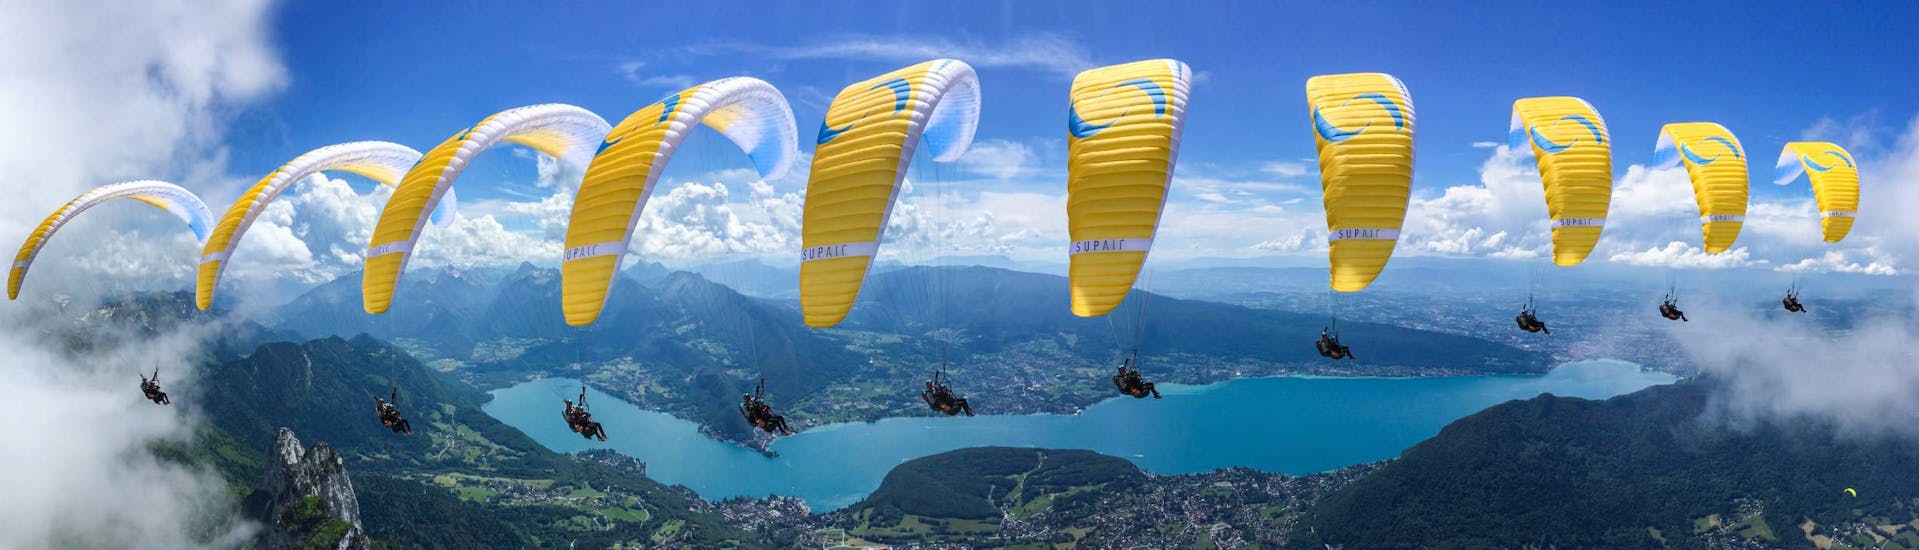 Tandem-Paragliding über dem Lac d'Annecy - Performance.